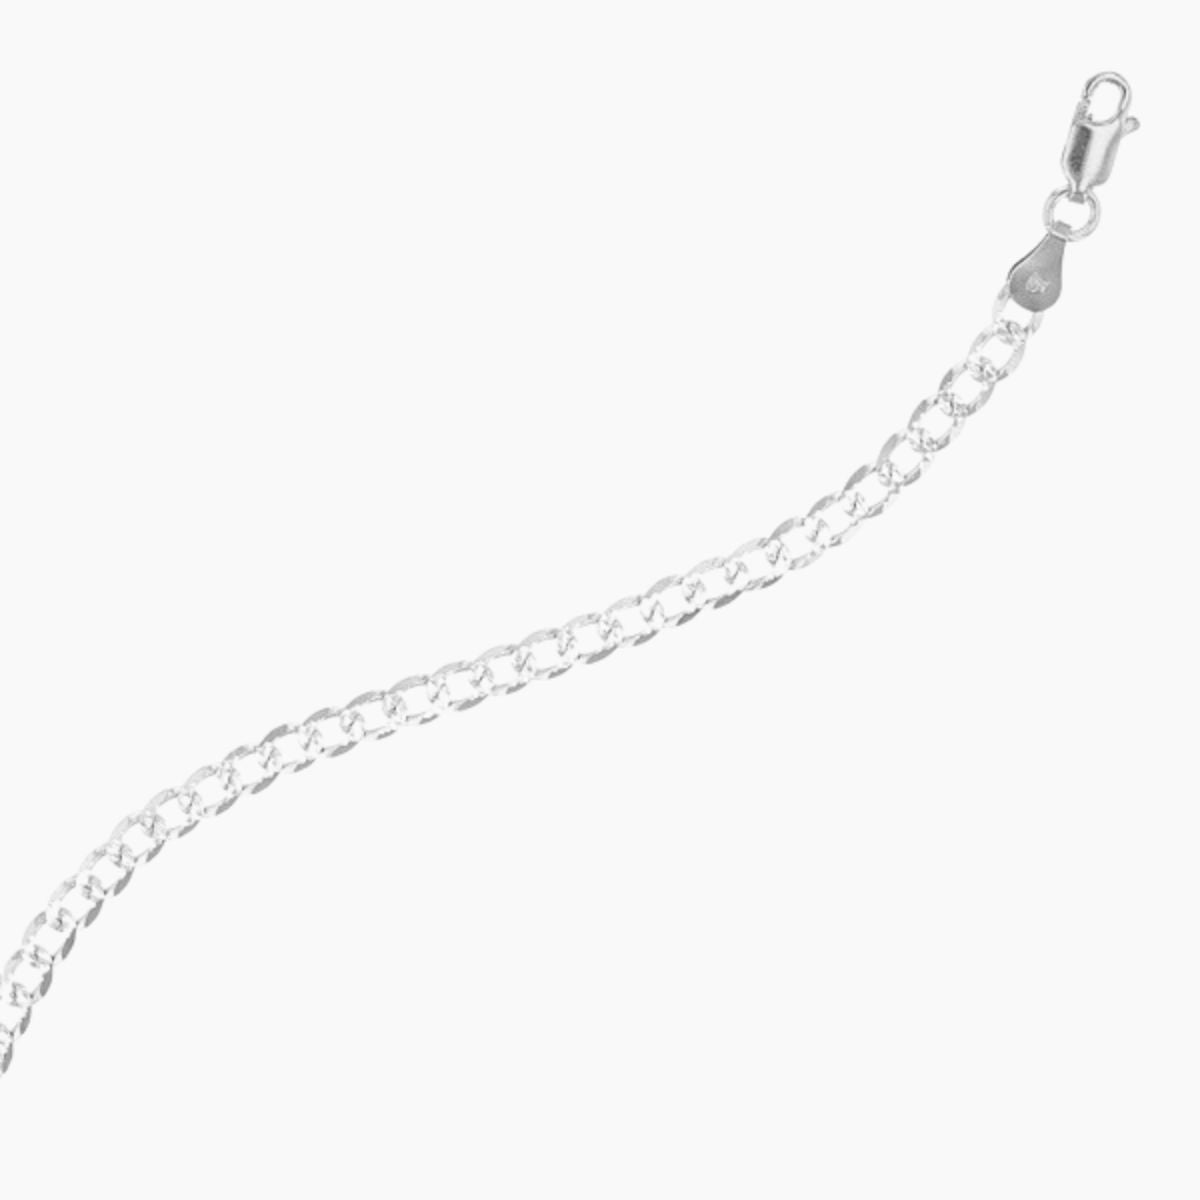 Valente Unisex Curb Chain (Silver)